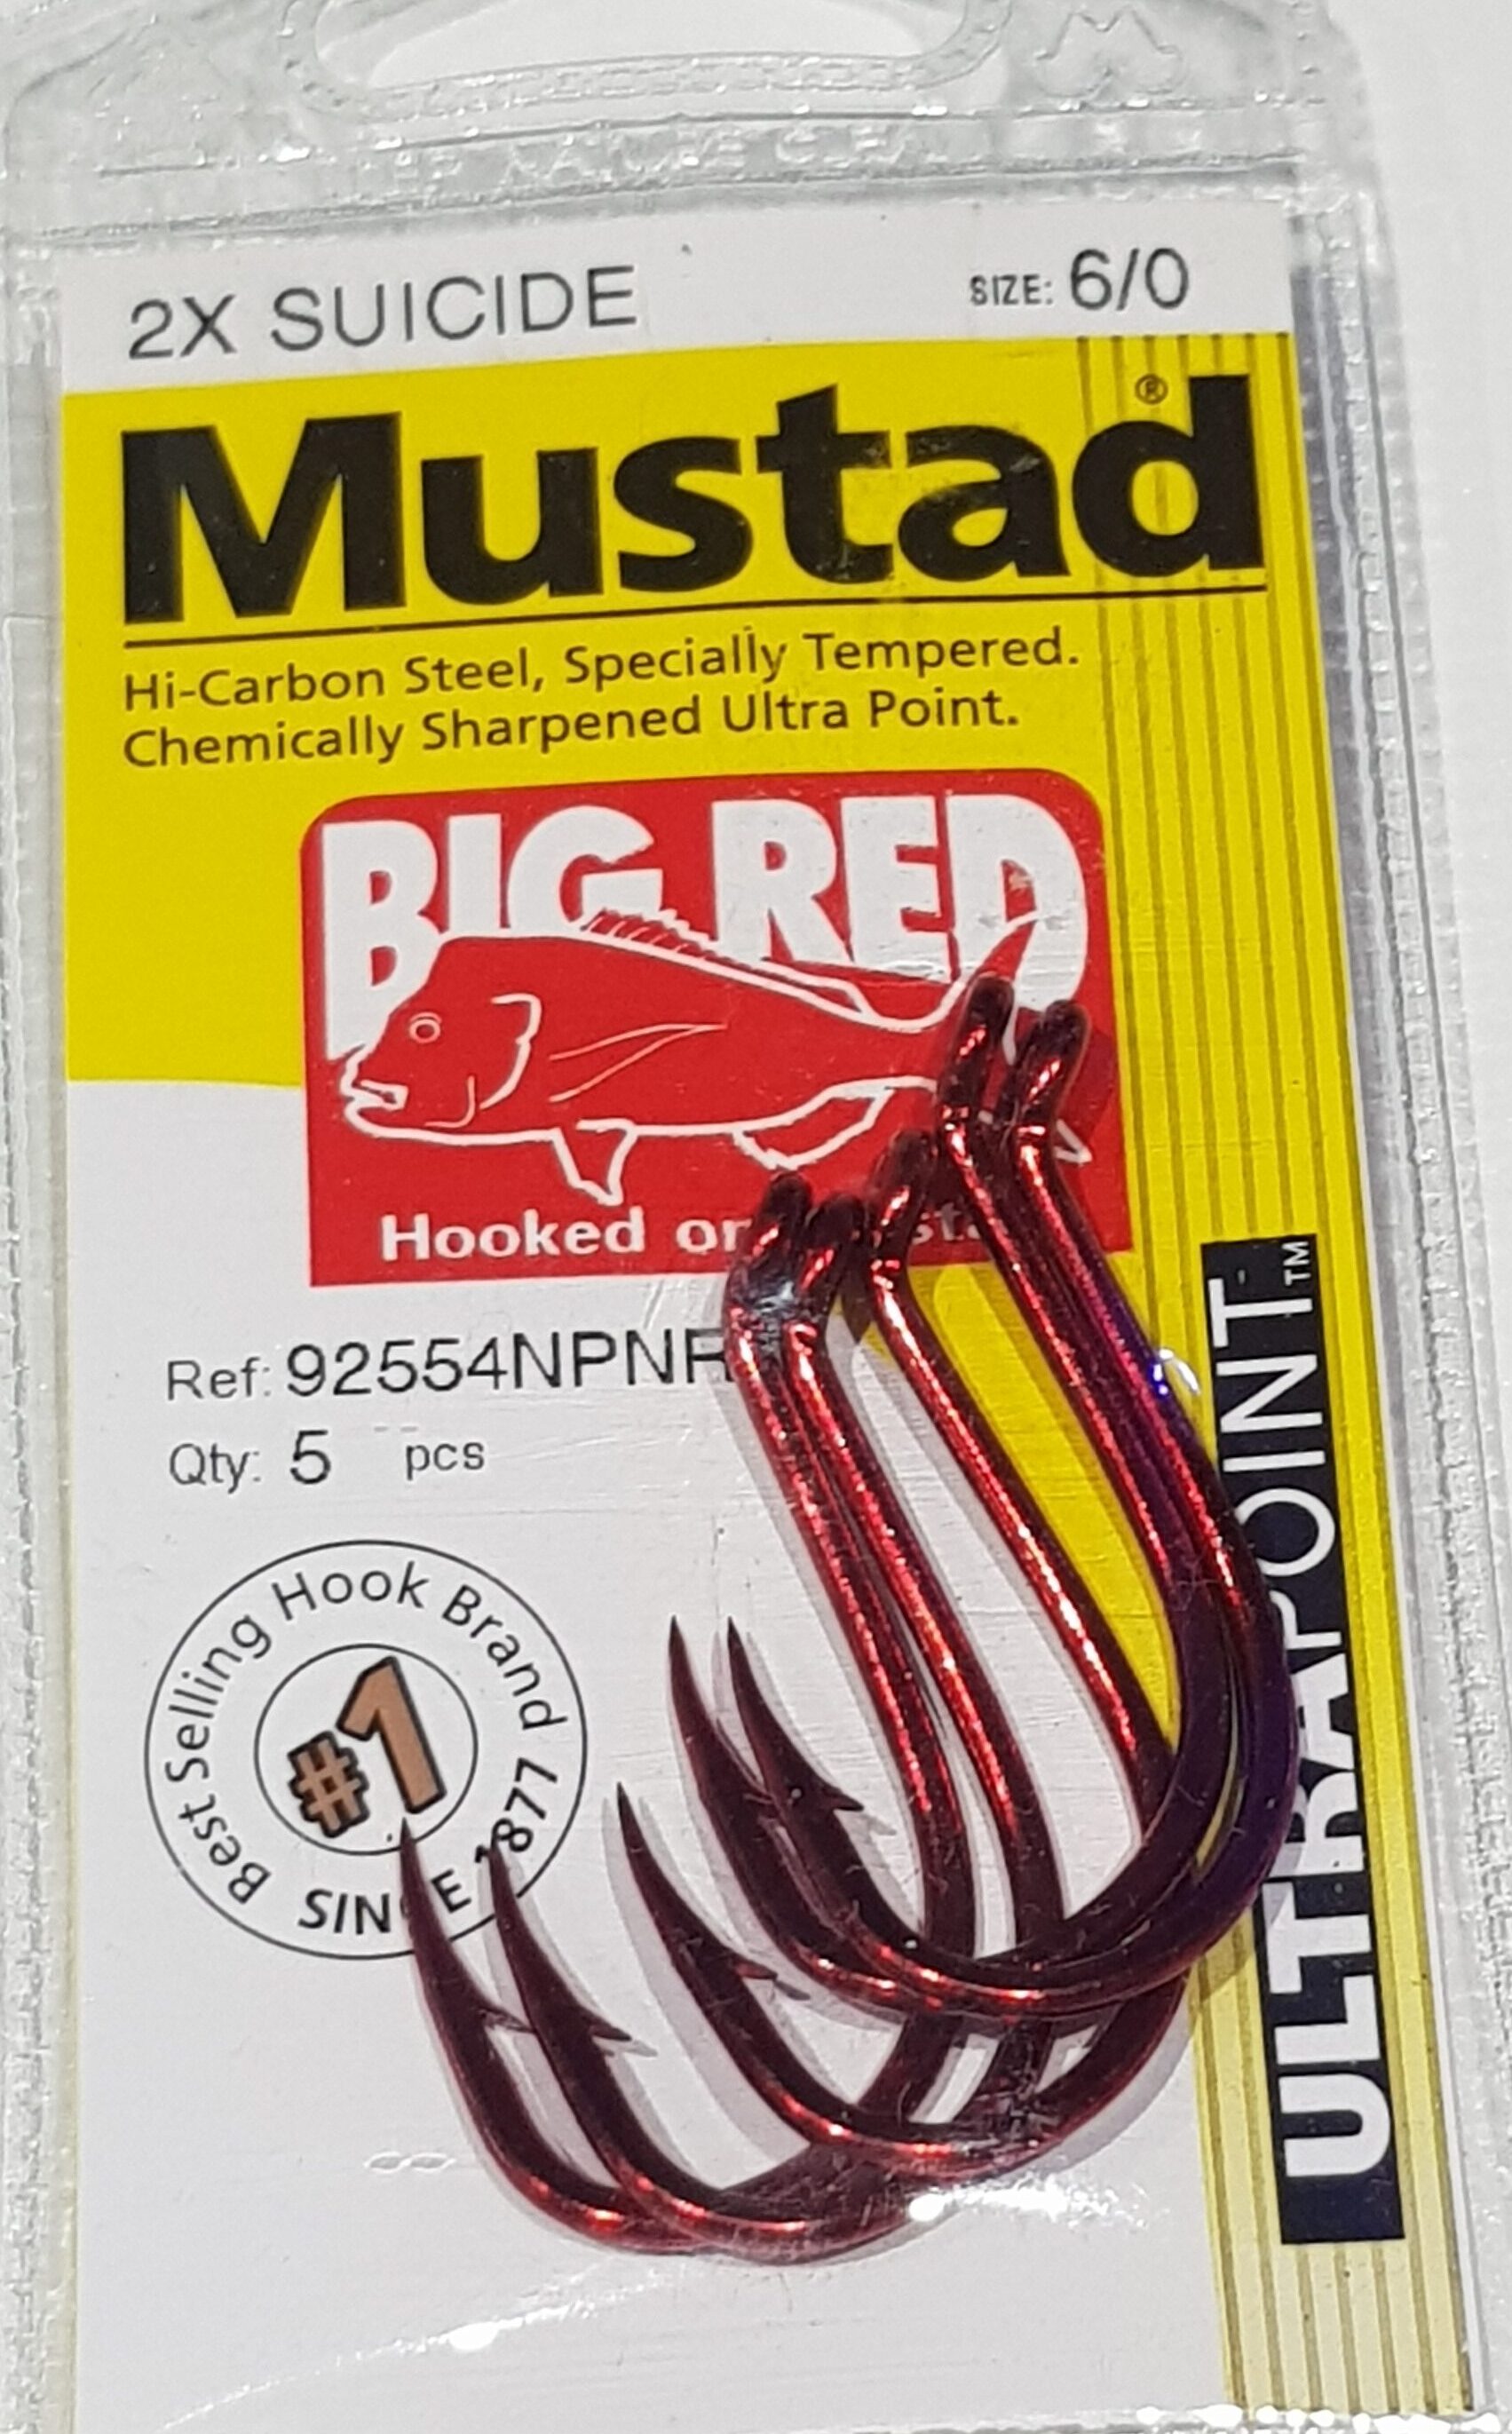 Mustad Big Red Suicide Fishing Hooks 6/0